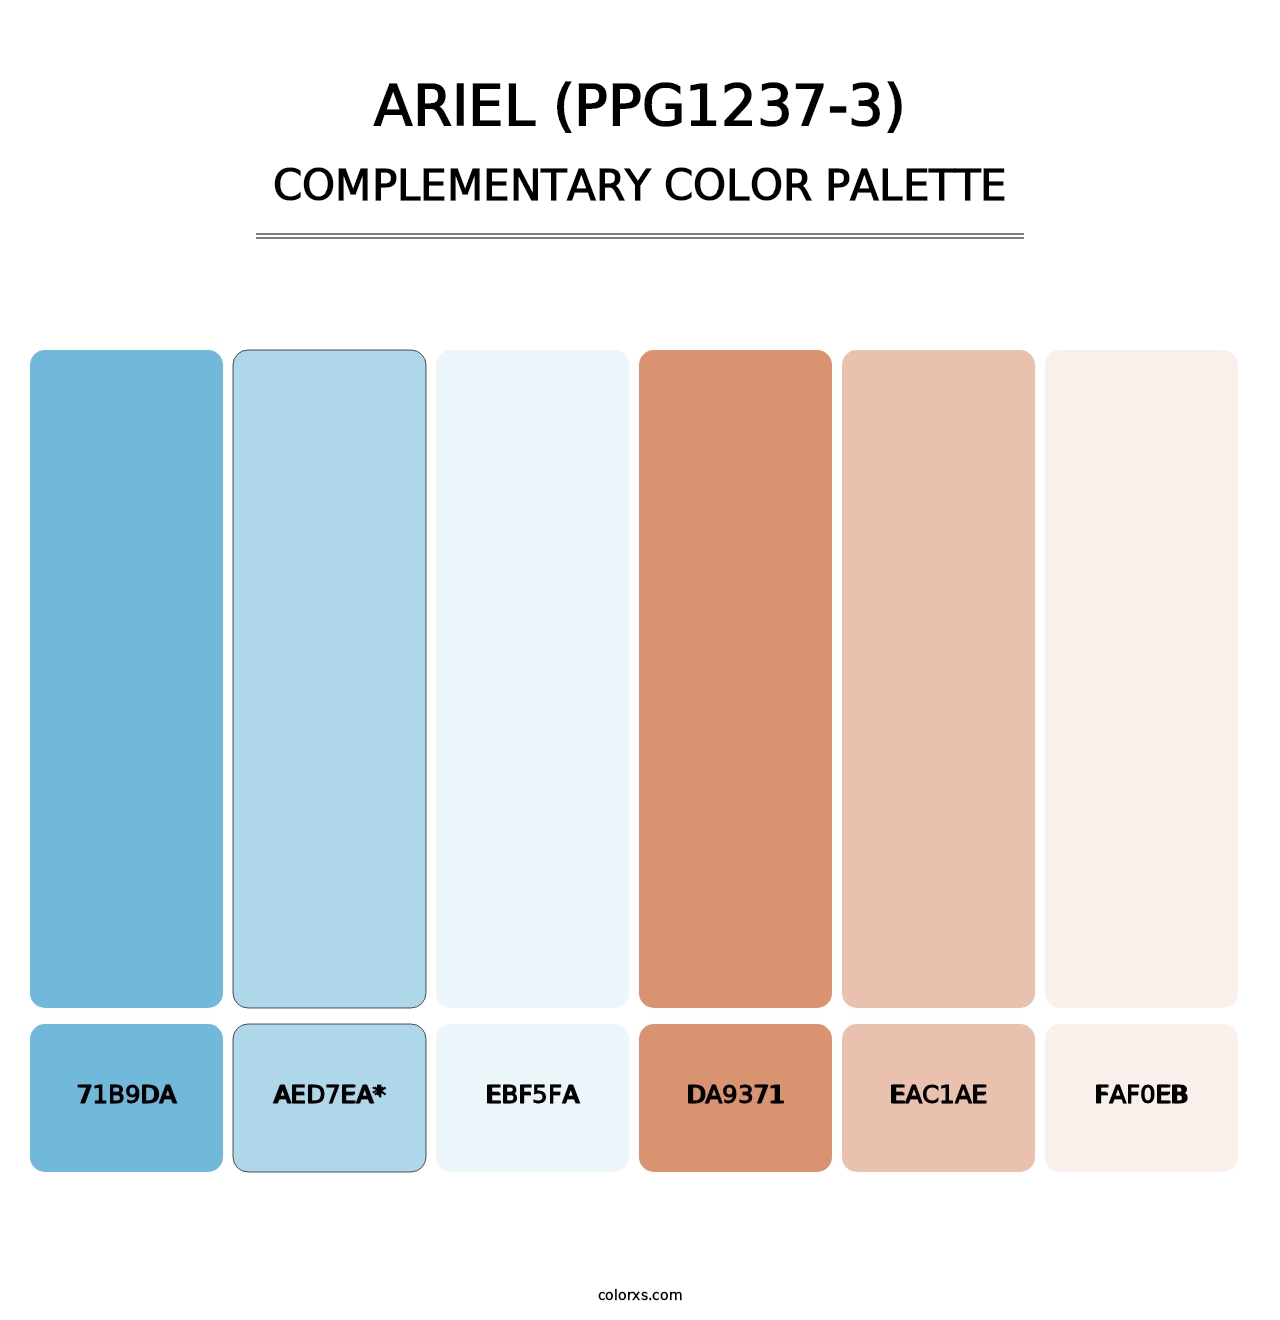 Ariel (PPG1237-3) - Complementary Color Palette